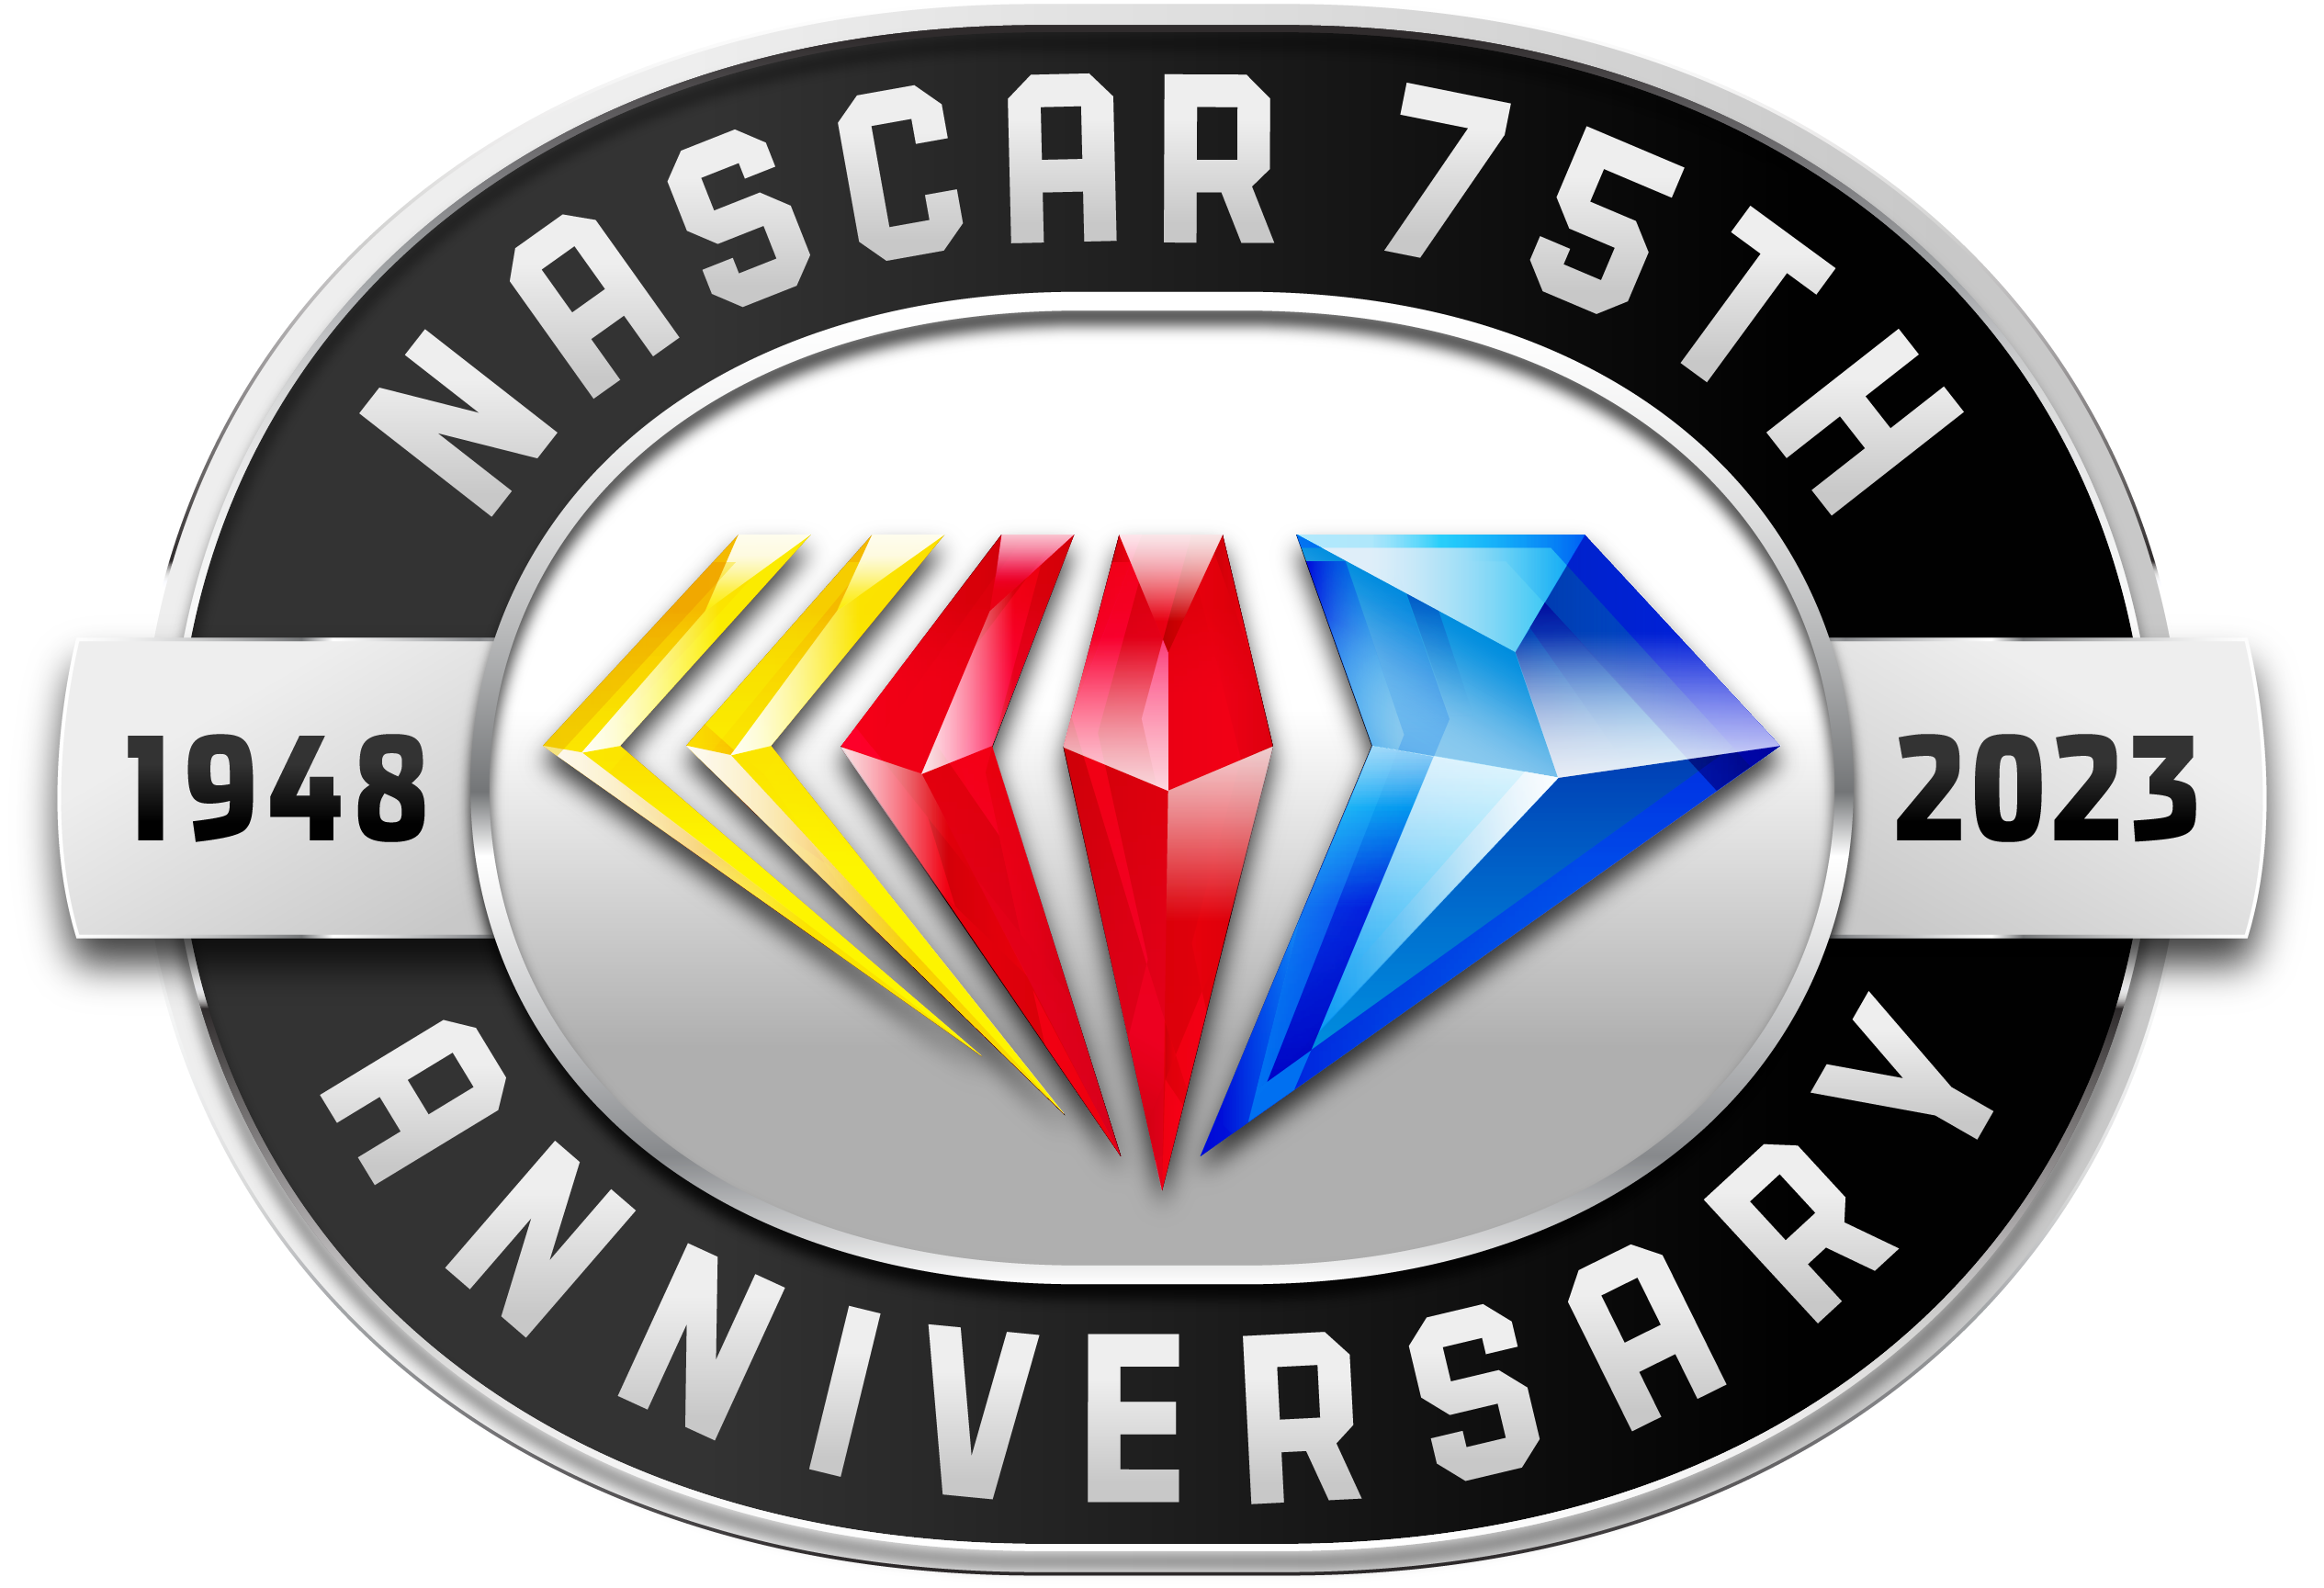 NASCAR 75th Anniversary Magazine